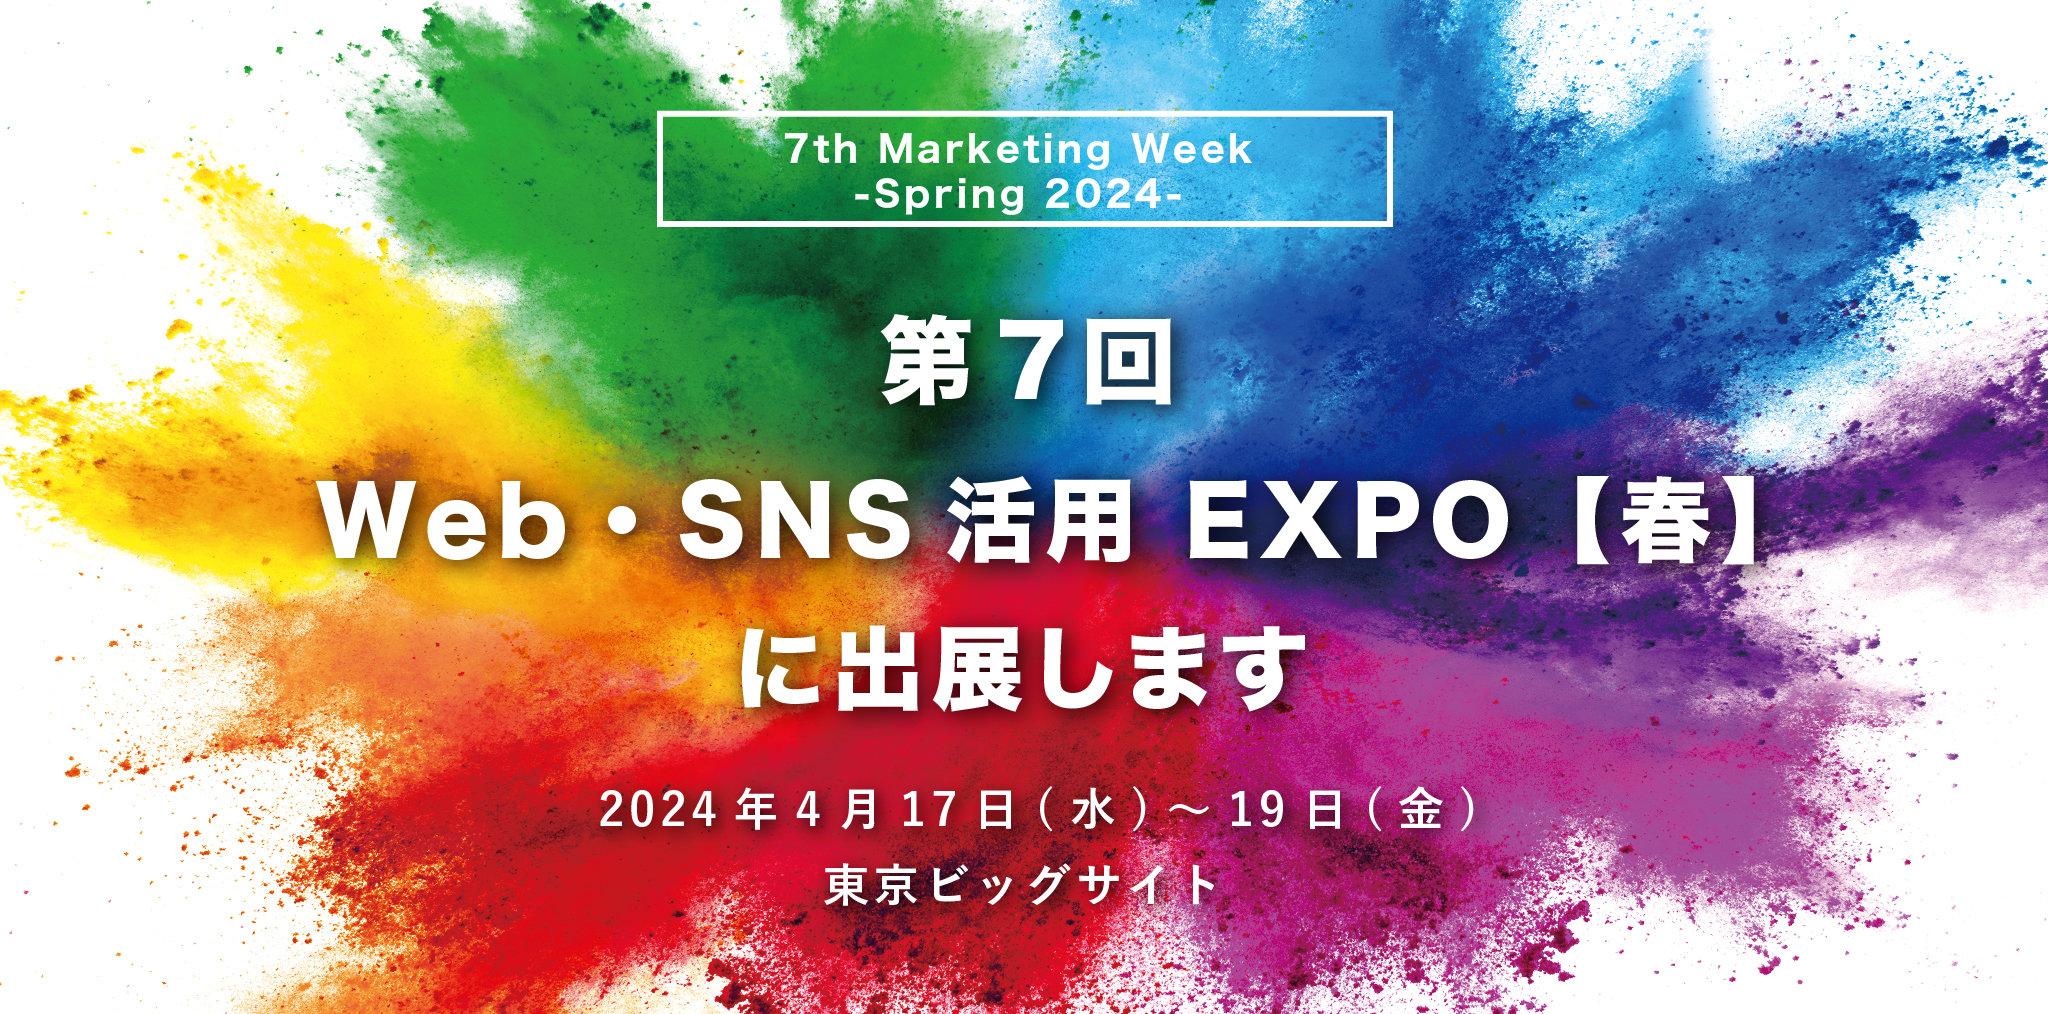 【7th Marketing Week -Spring 2024-】第7回 Web・SNS活用 EXPO【春】に出展します